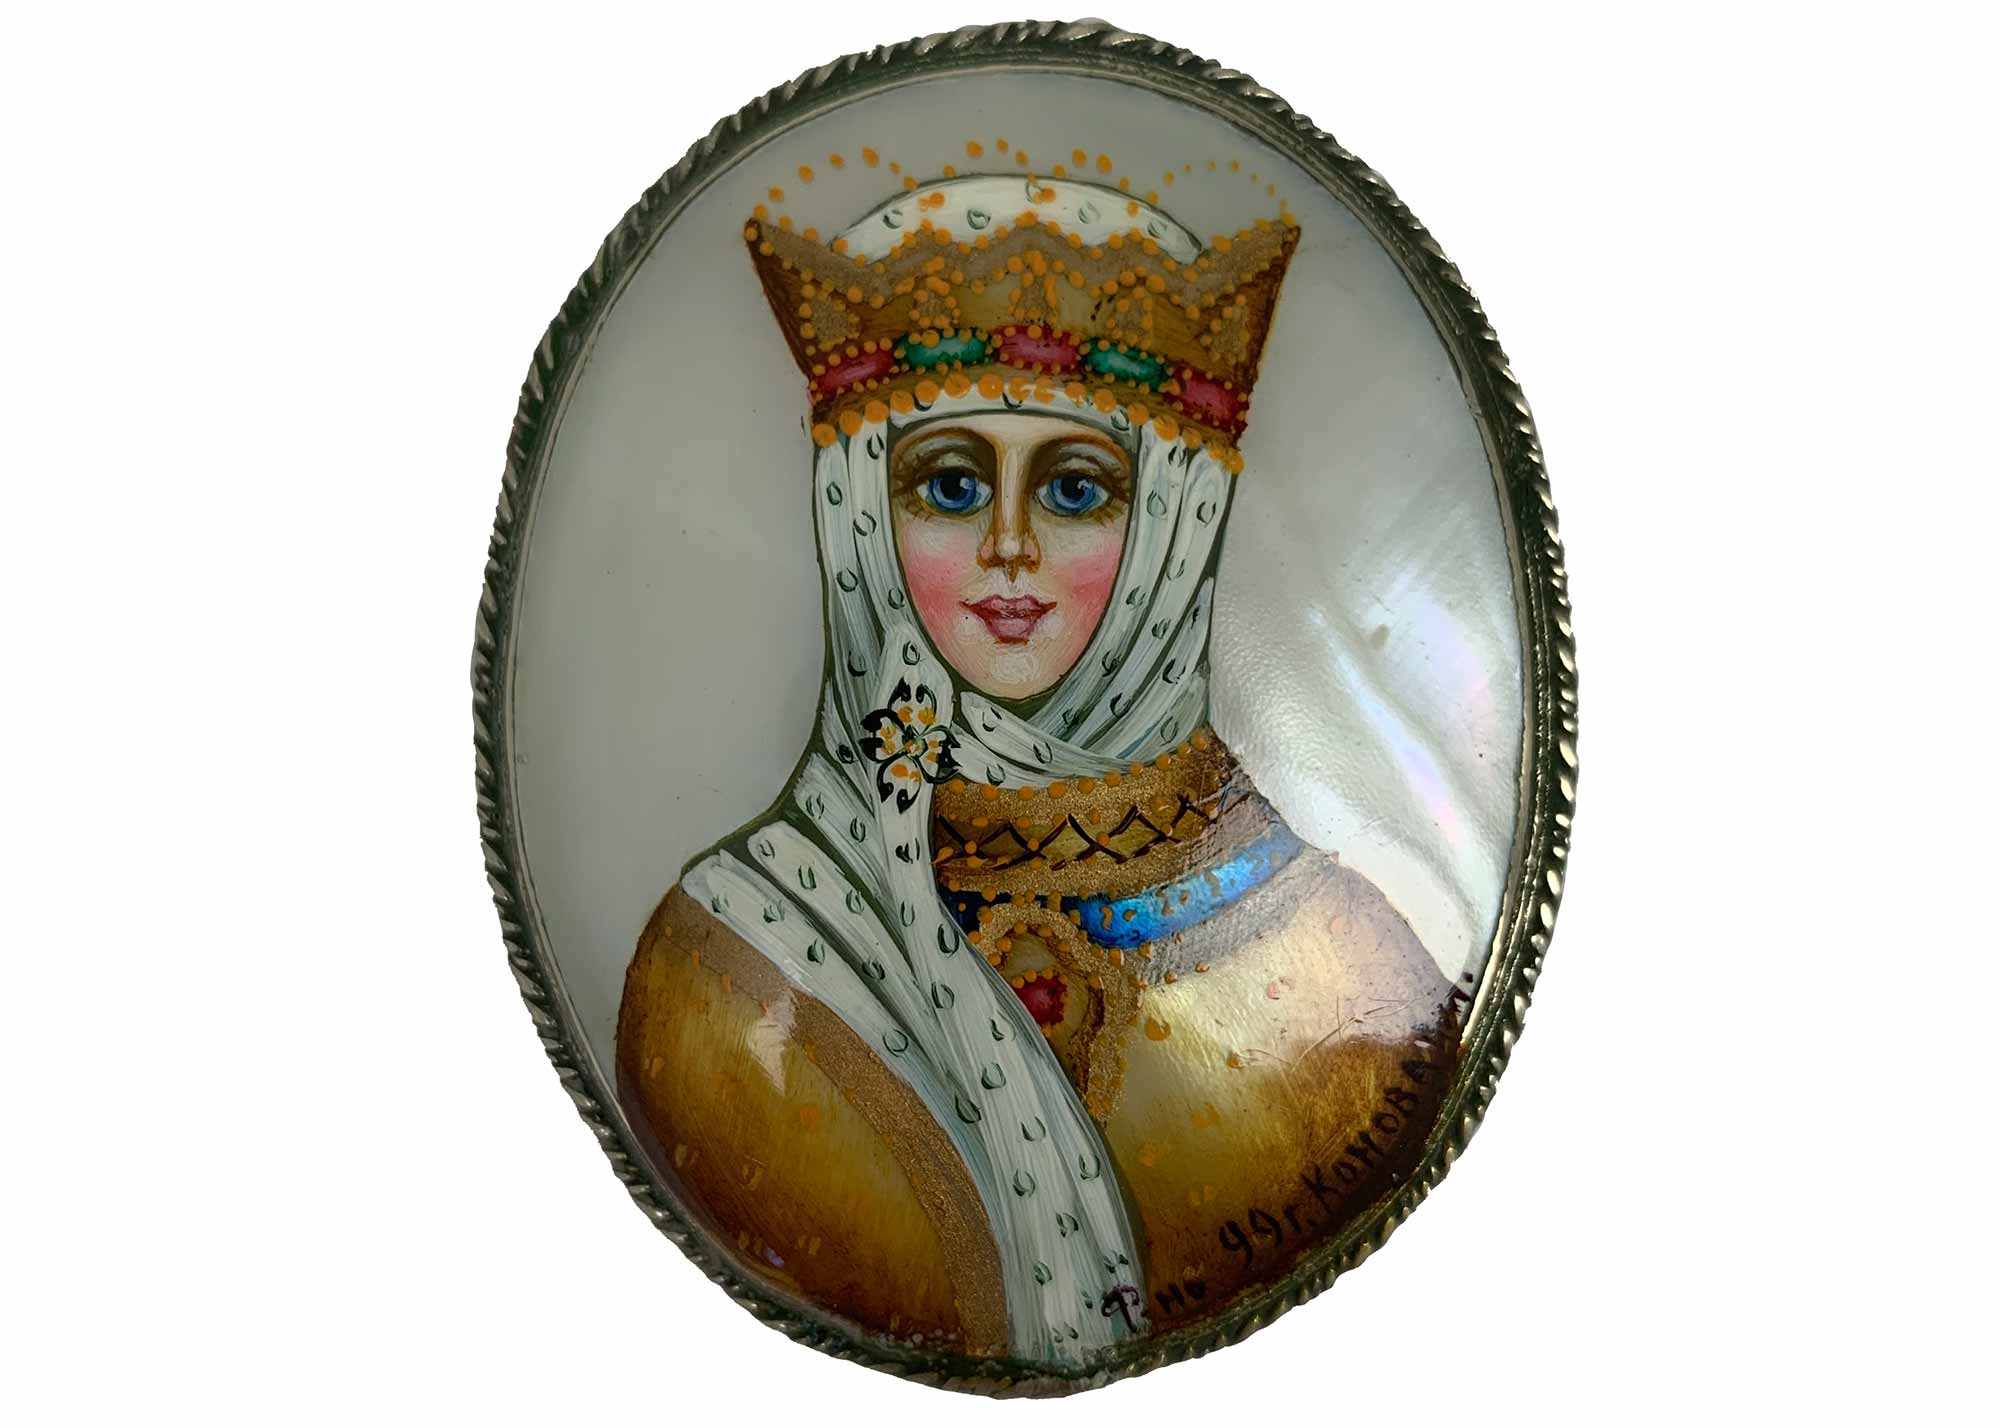 Buy Vintage Mother of Pearl Portrait Brooch Fayina at GoldenCockerel.com